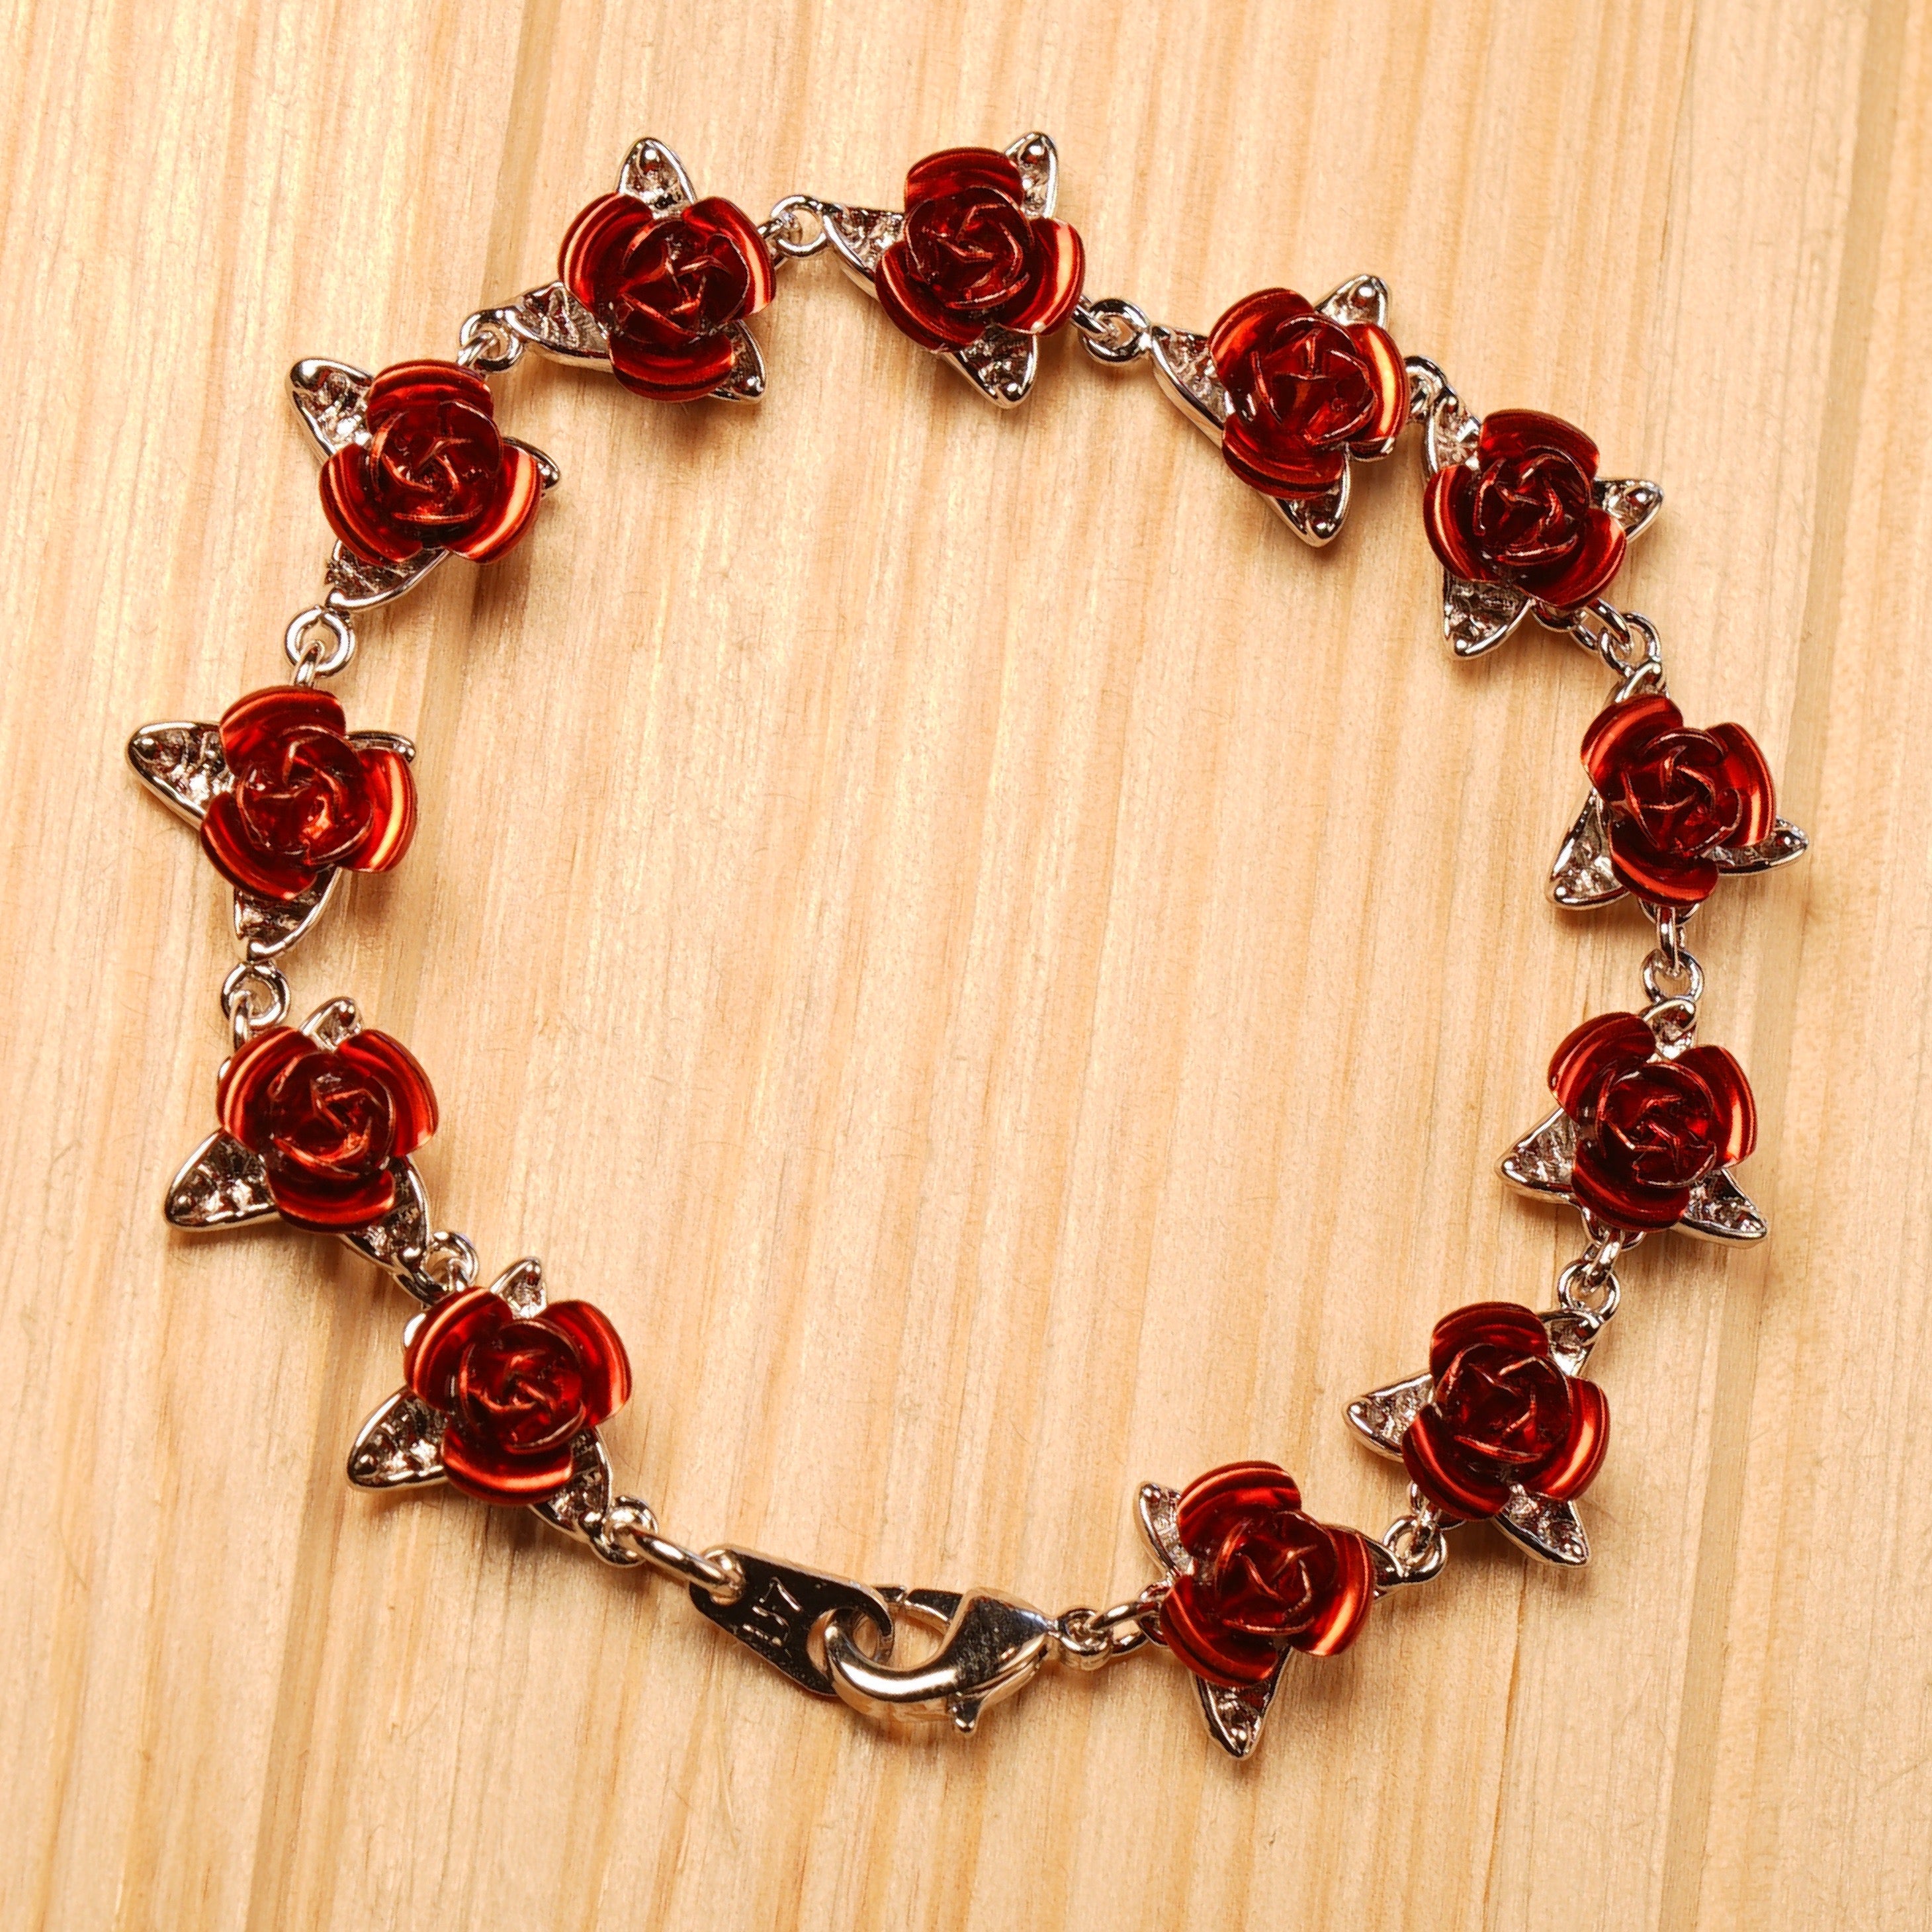 Rose Bracelet Flower Charm Bangle Red Rose Chain Bracelet Valentine's Day  Gift - Walmart.com